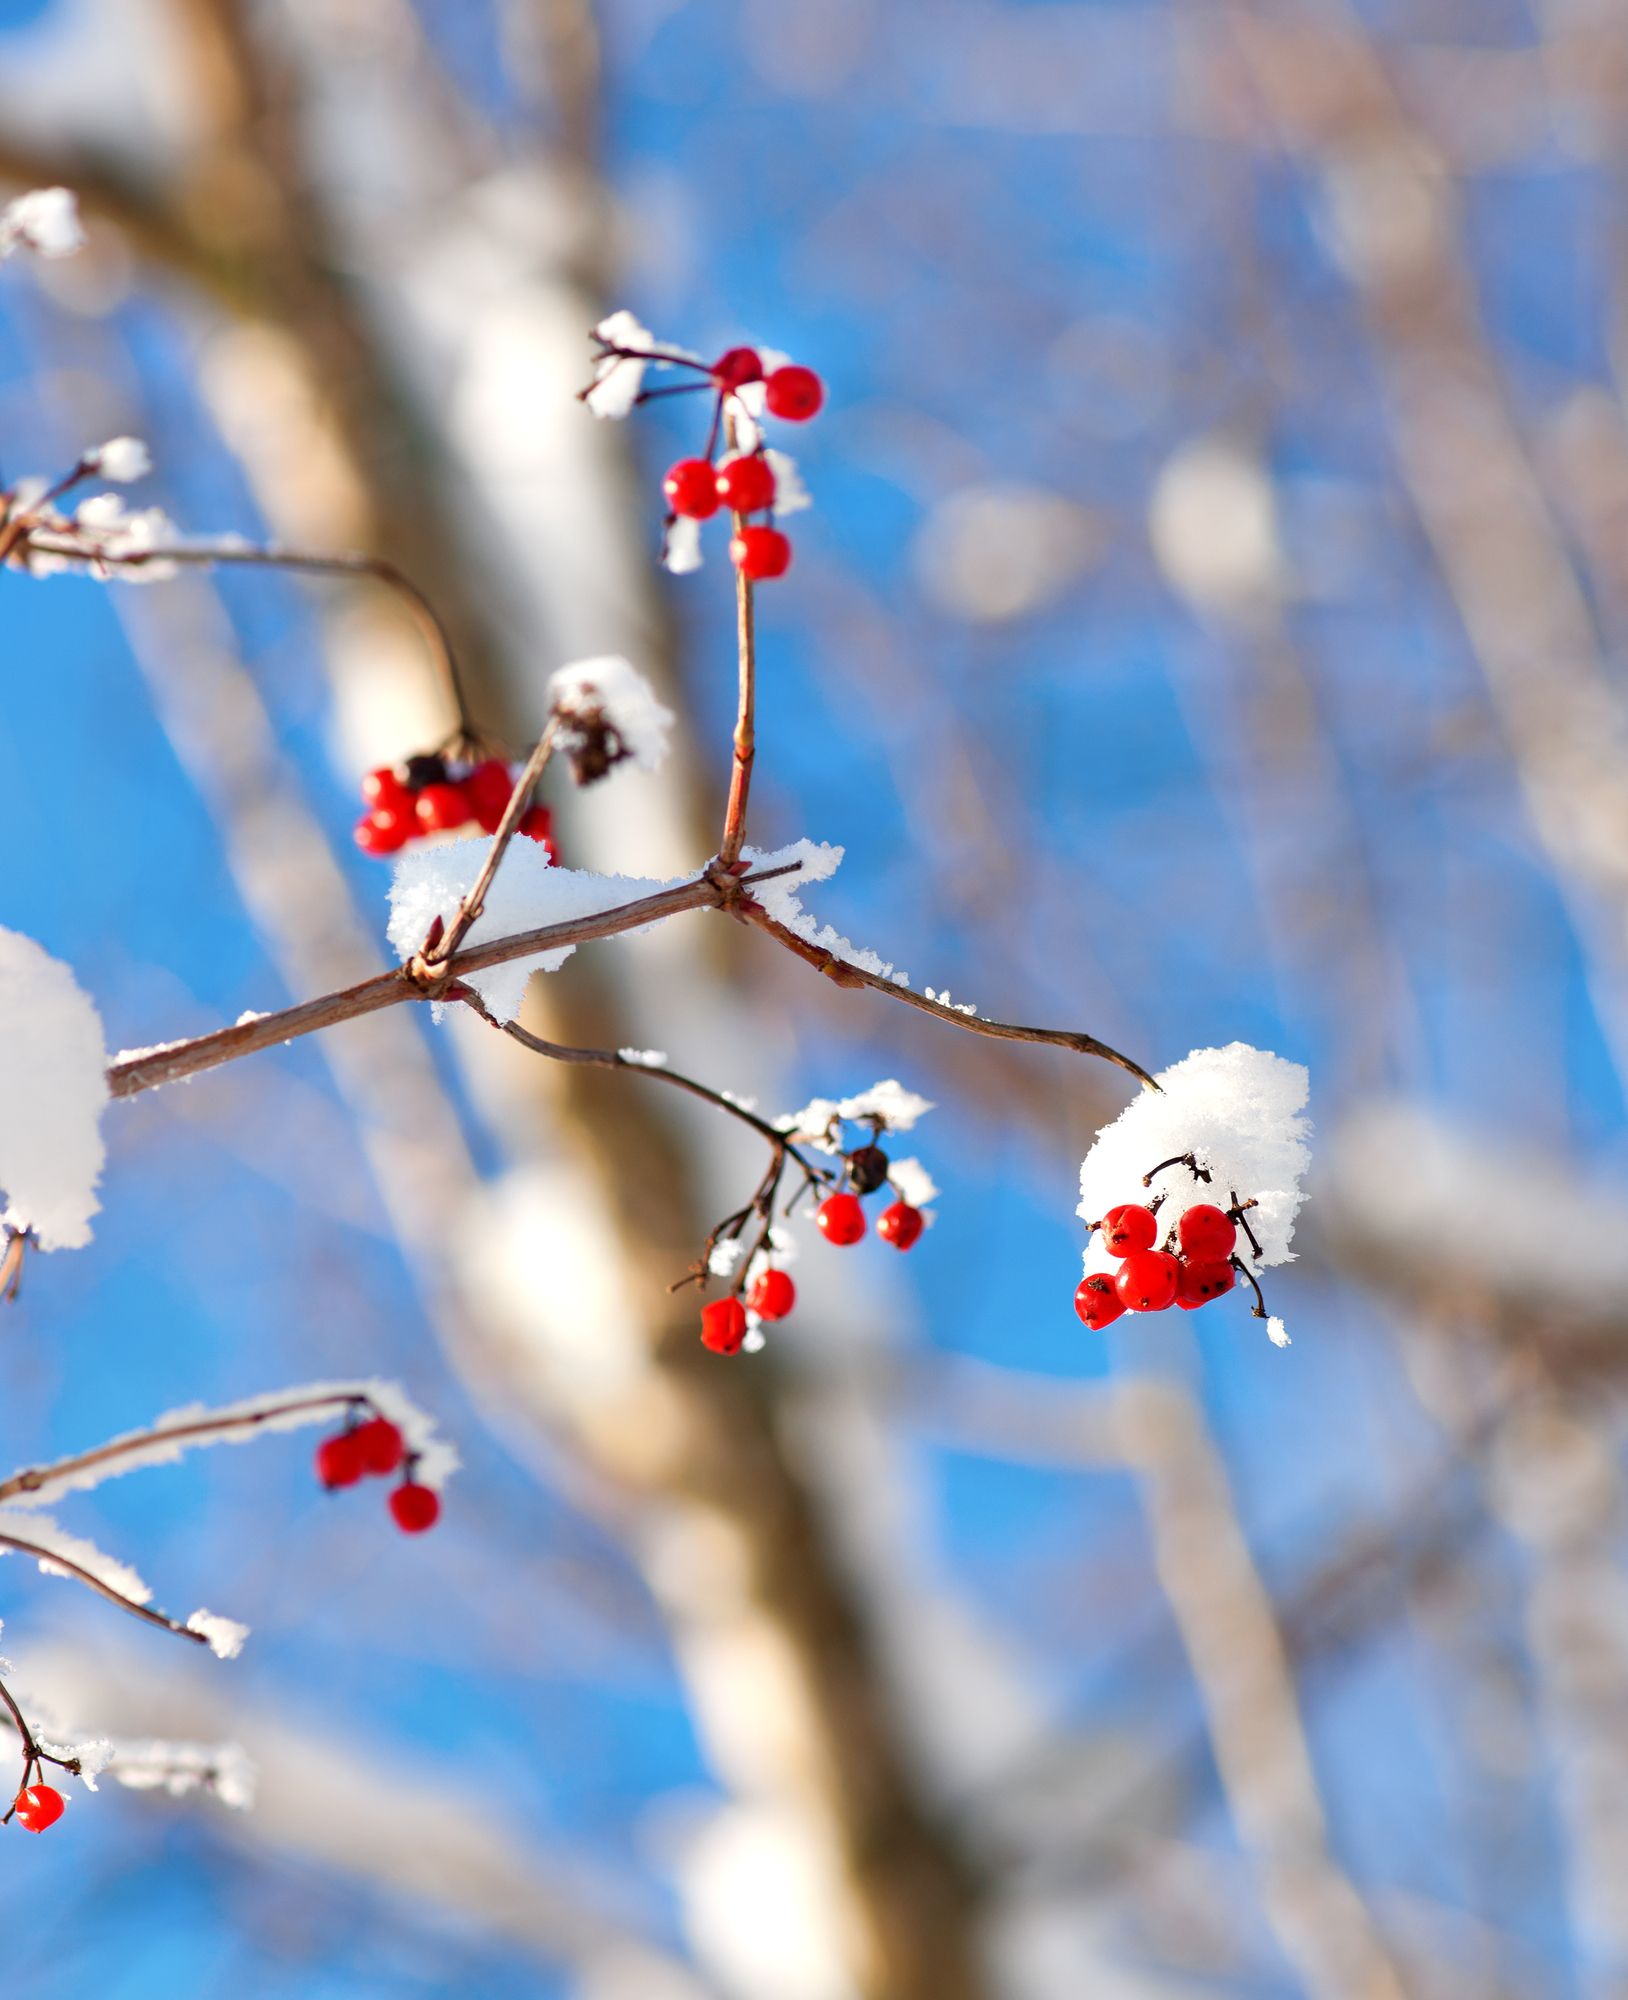 Red berries in winter